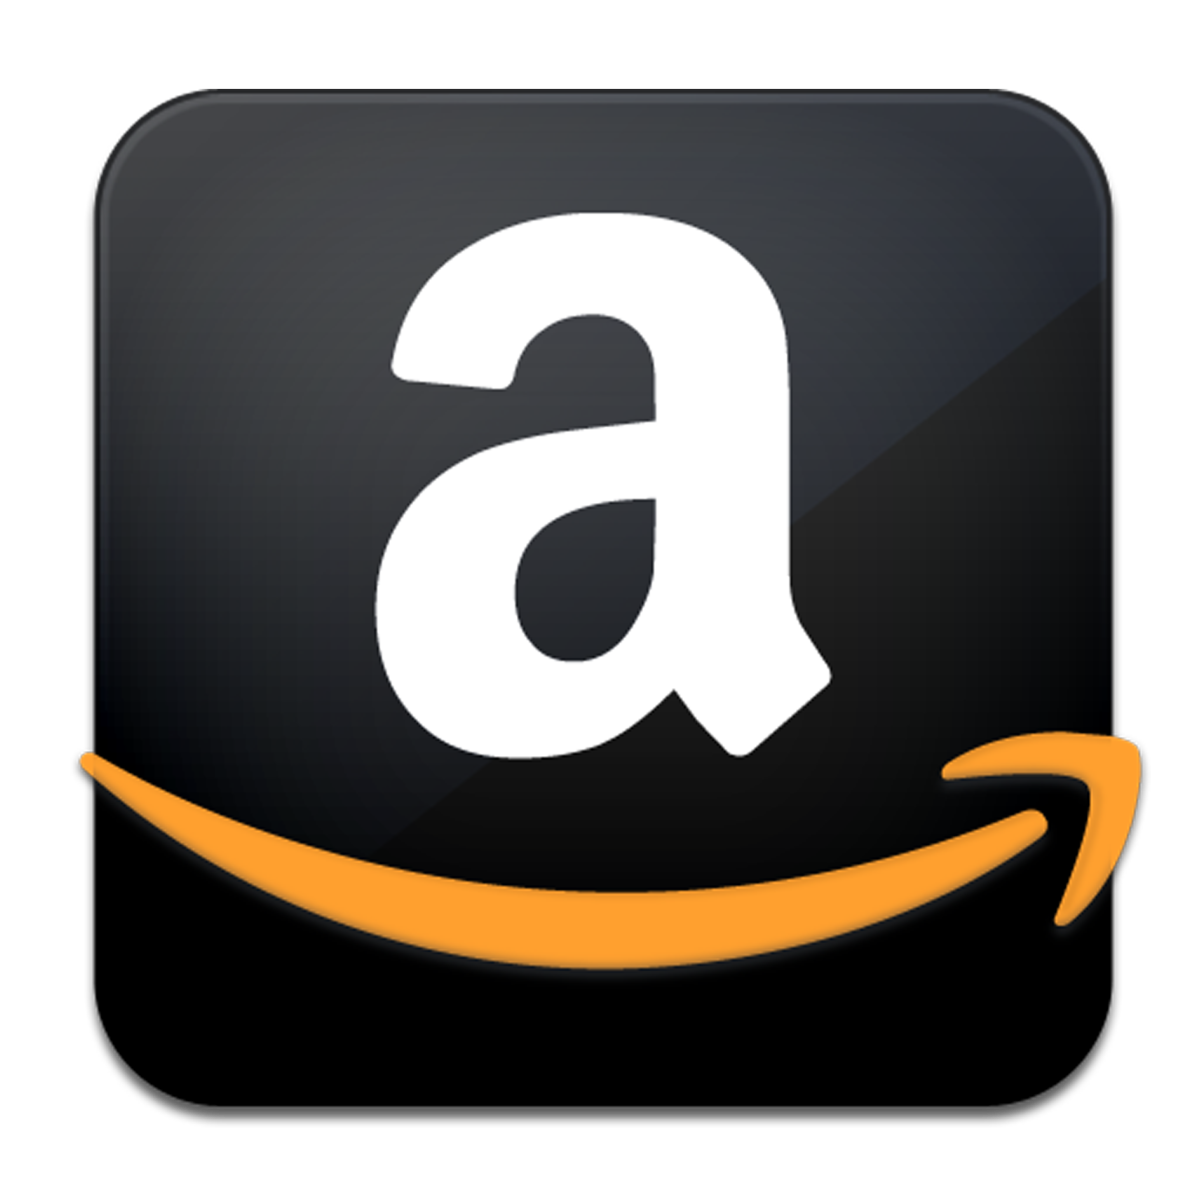 Official Amazon.com logo.